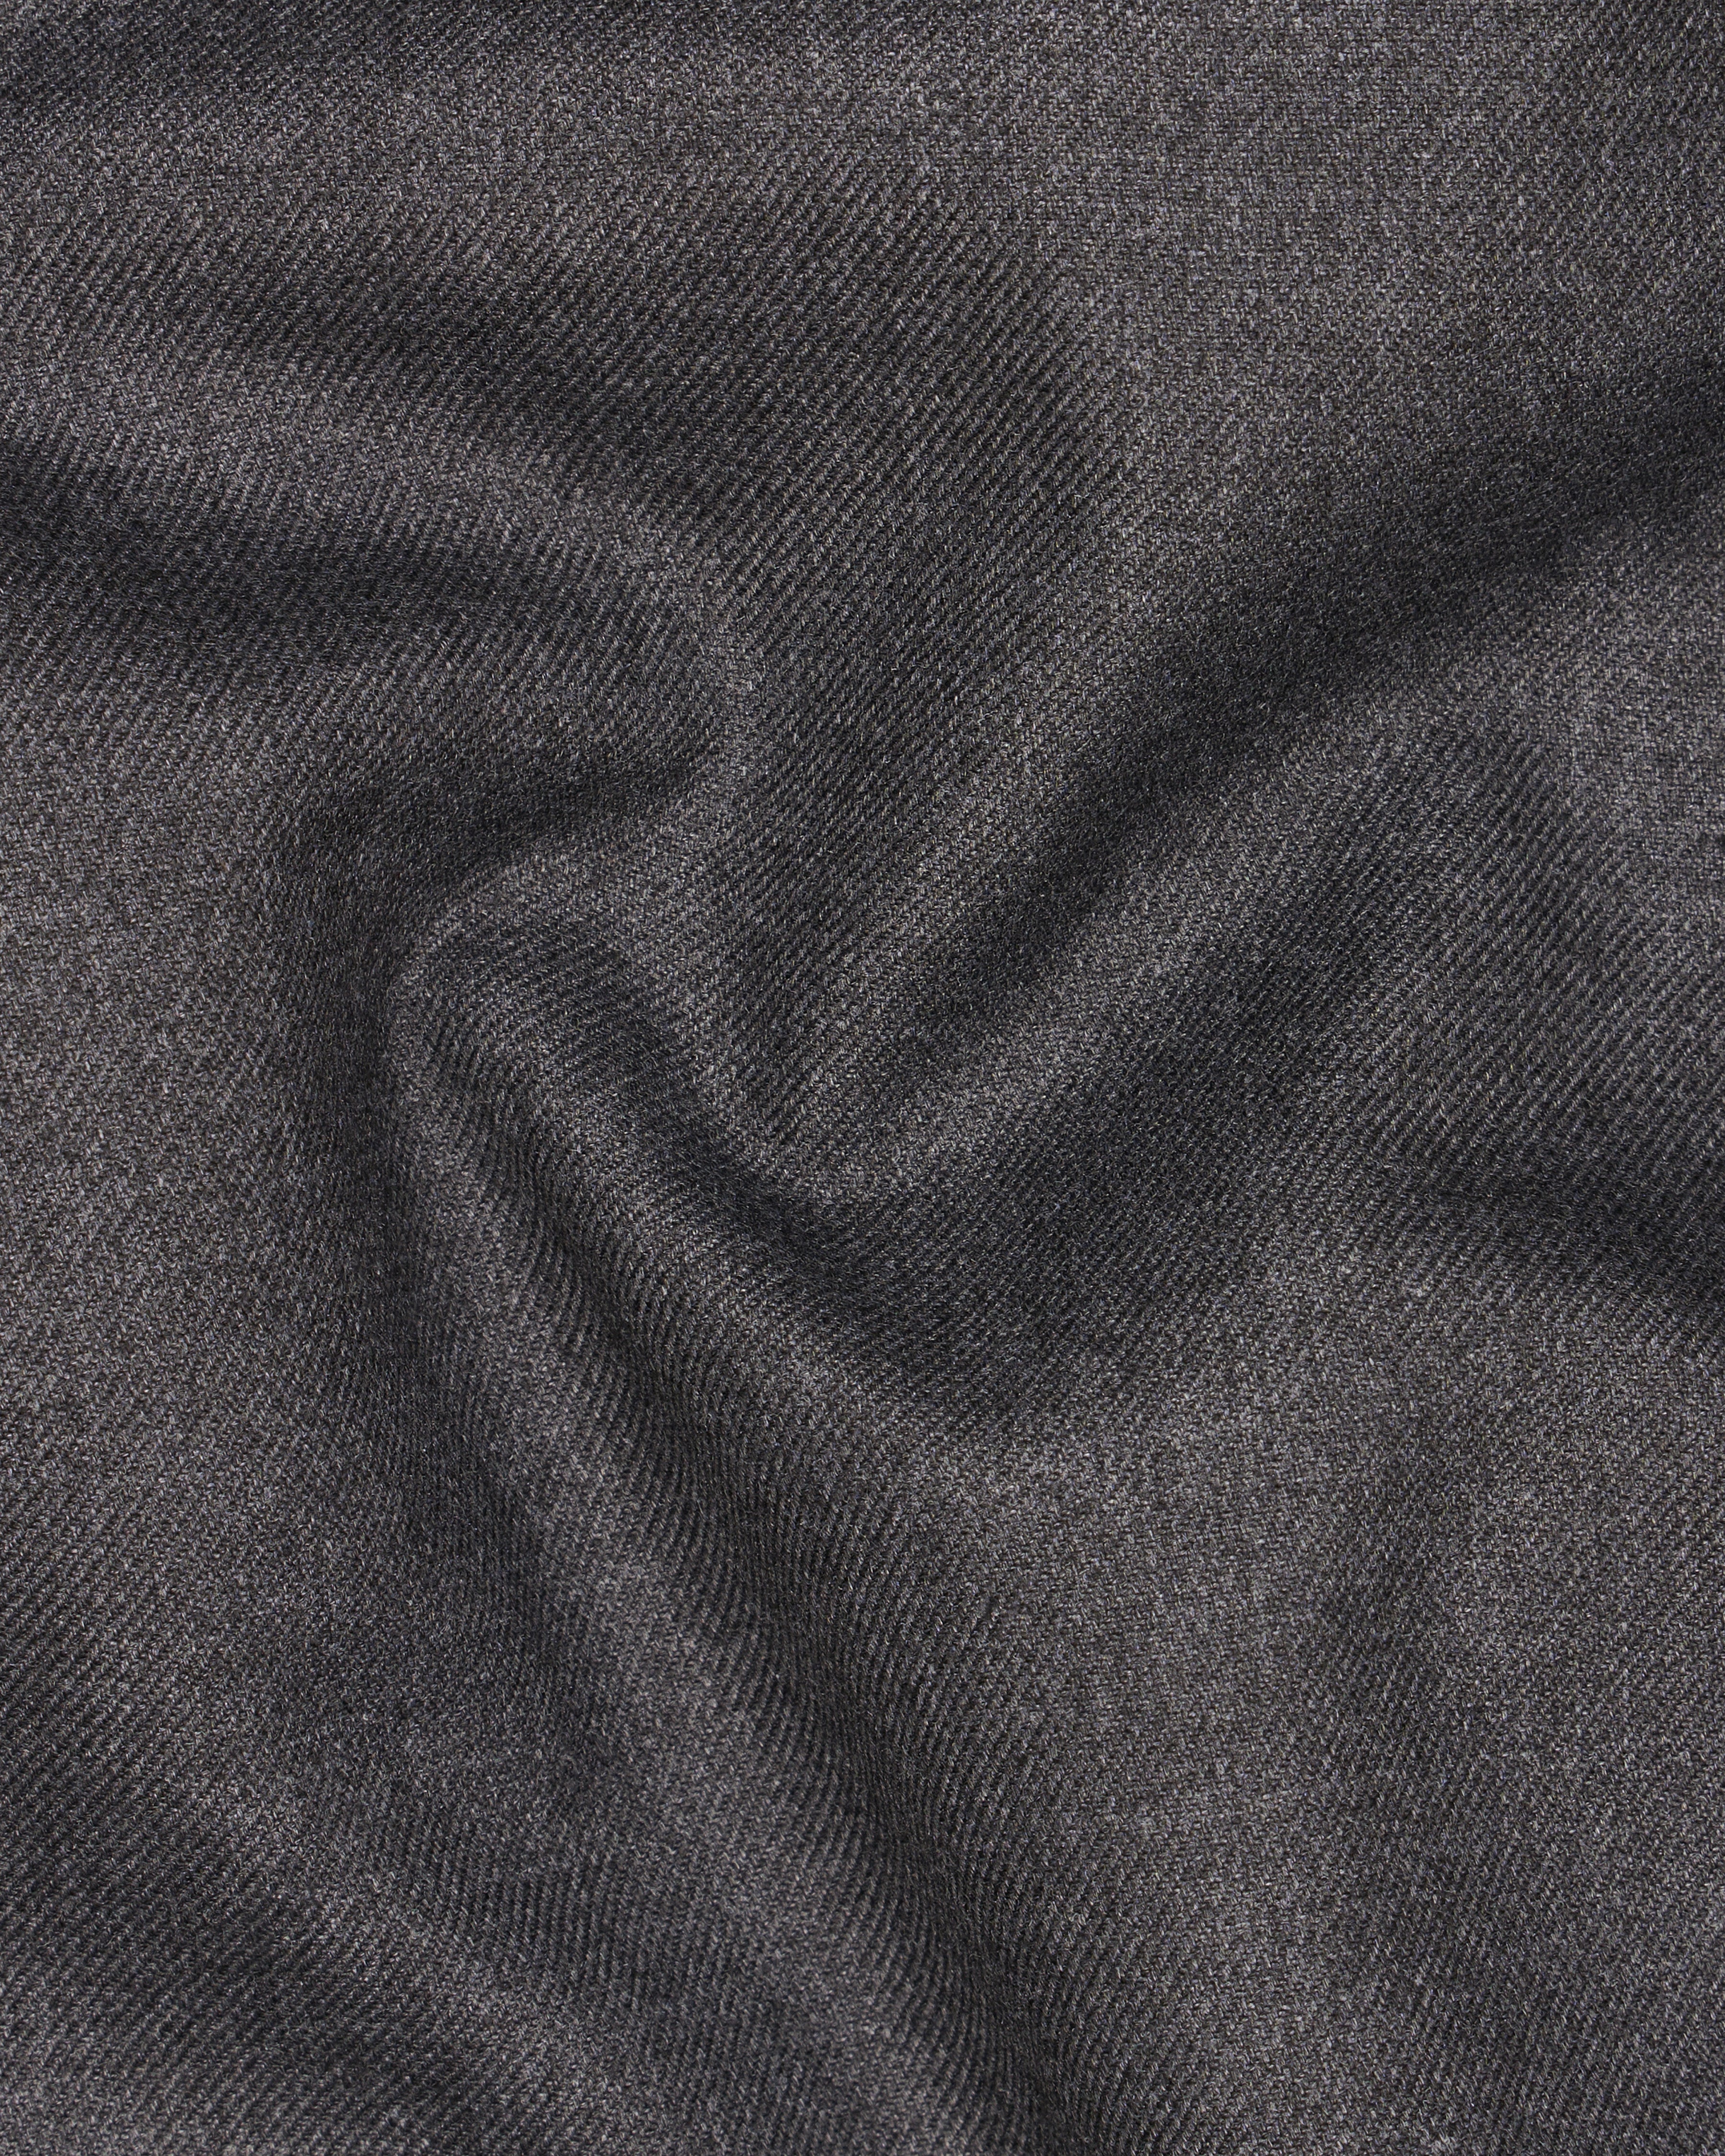 Gravel Gray Wool Rich Pants T2507-28, T2507-30, T2507-32, T2507-34, T2507-36, T2507-38, T2507-40, T2507-42, T2507-44